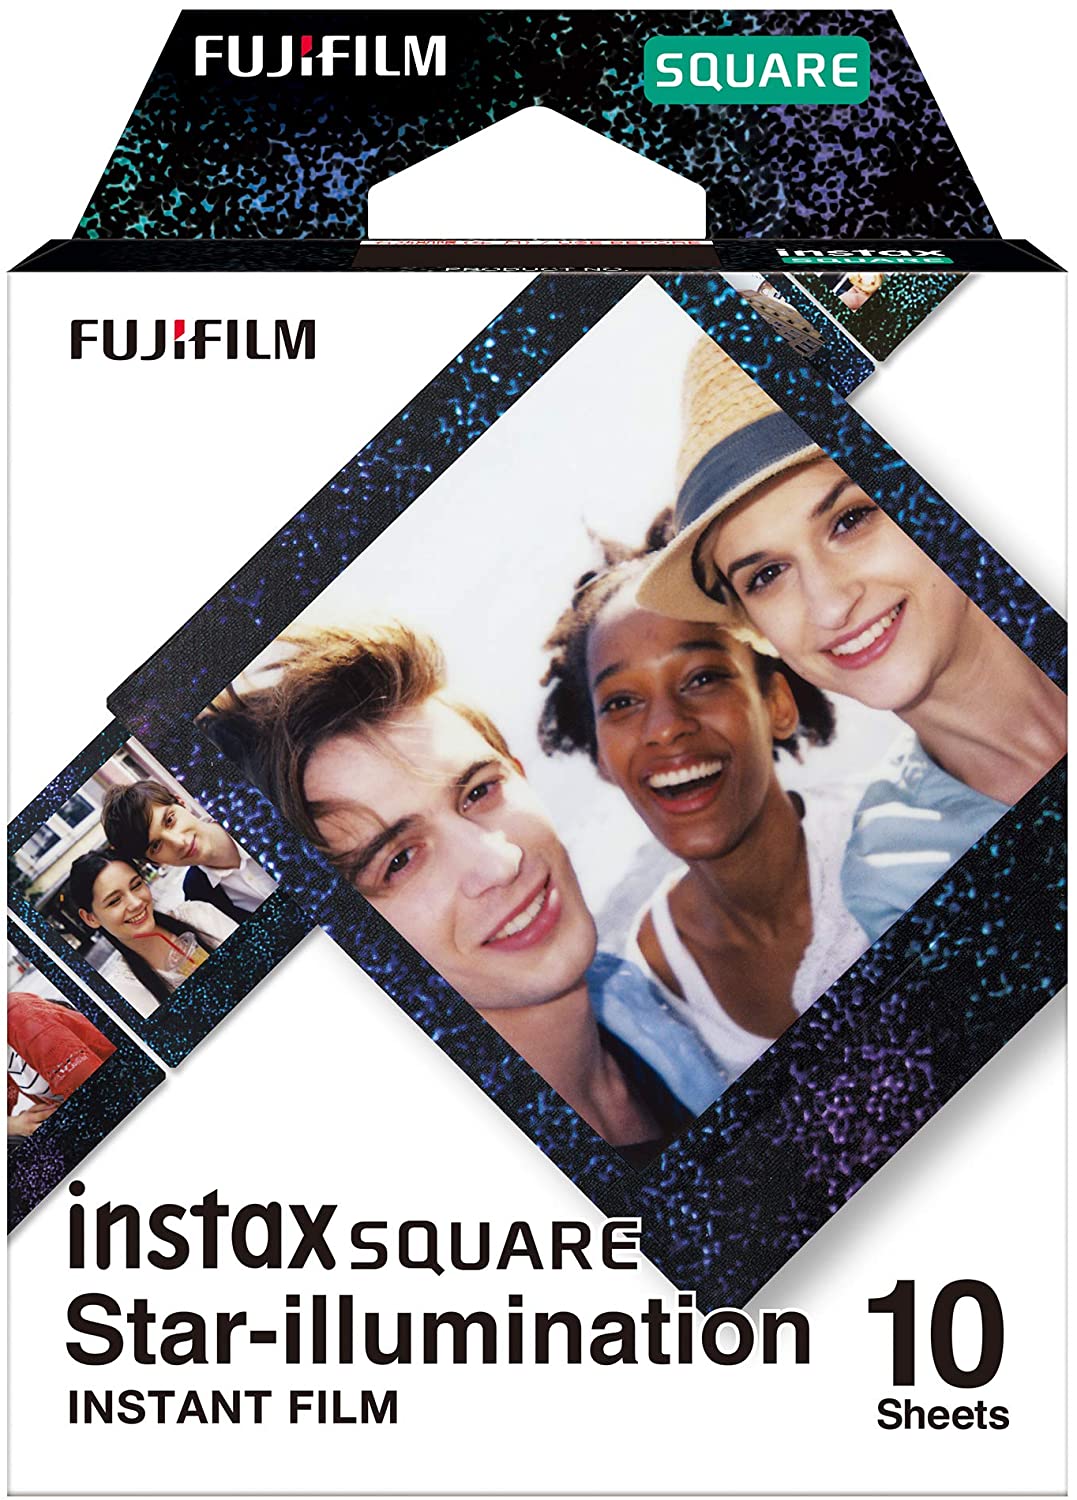 Fujifilm Instax Square Black Frame Film 10 Sheets. Instant Film